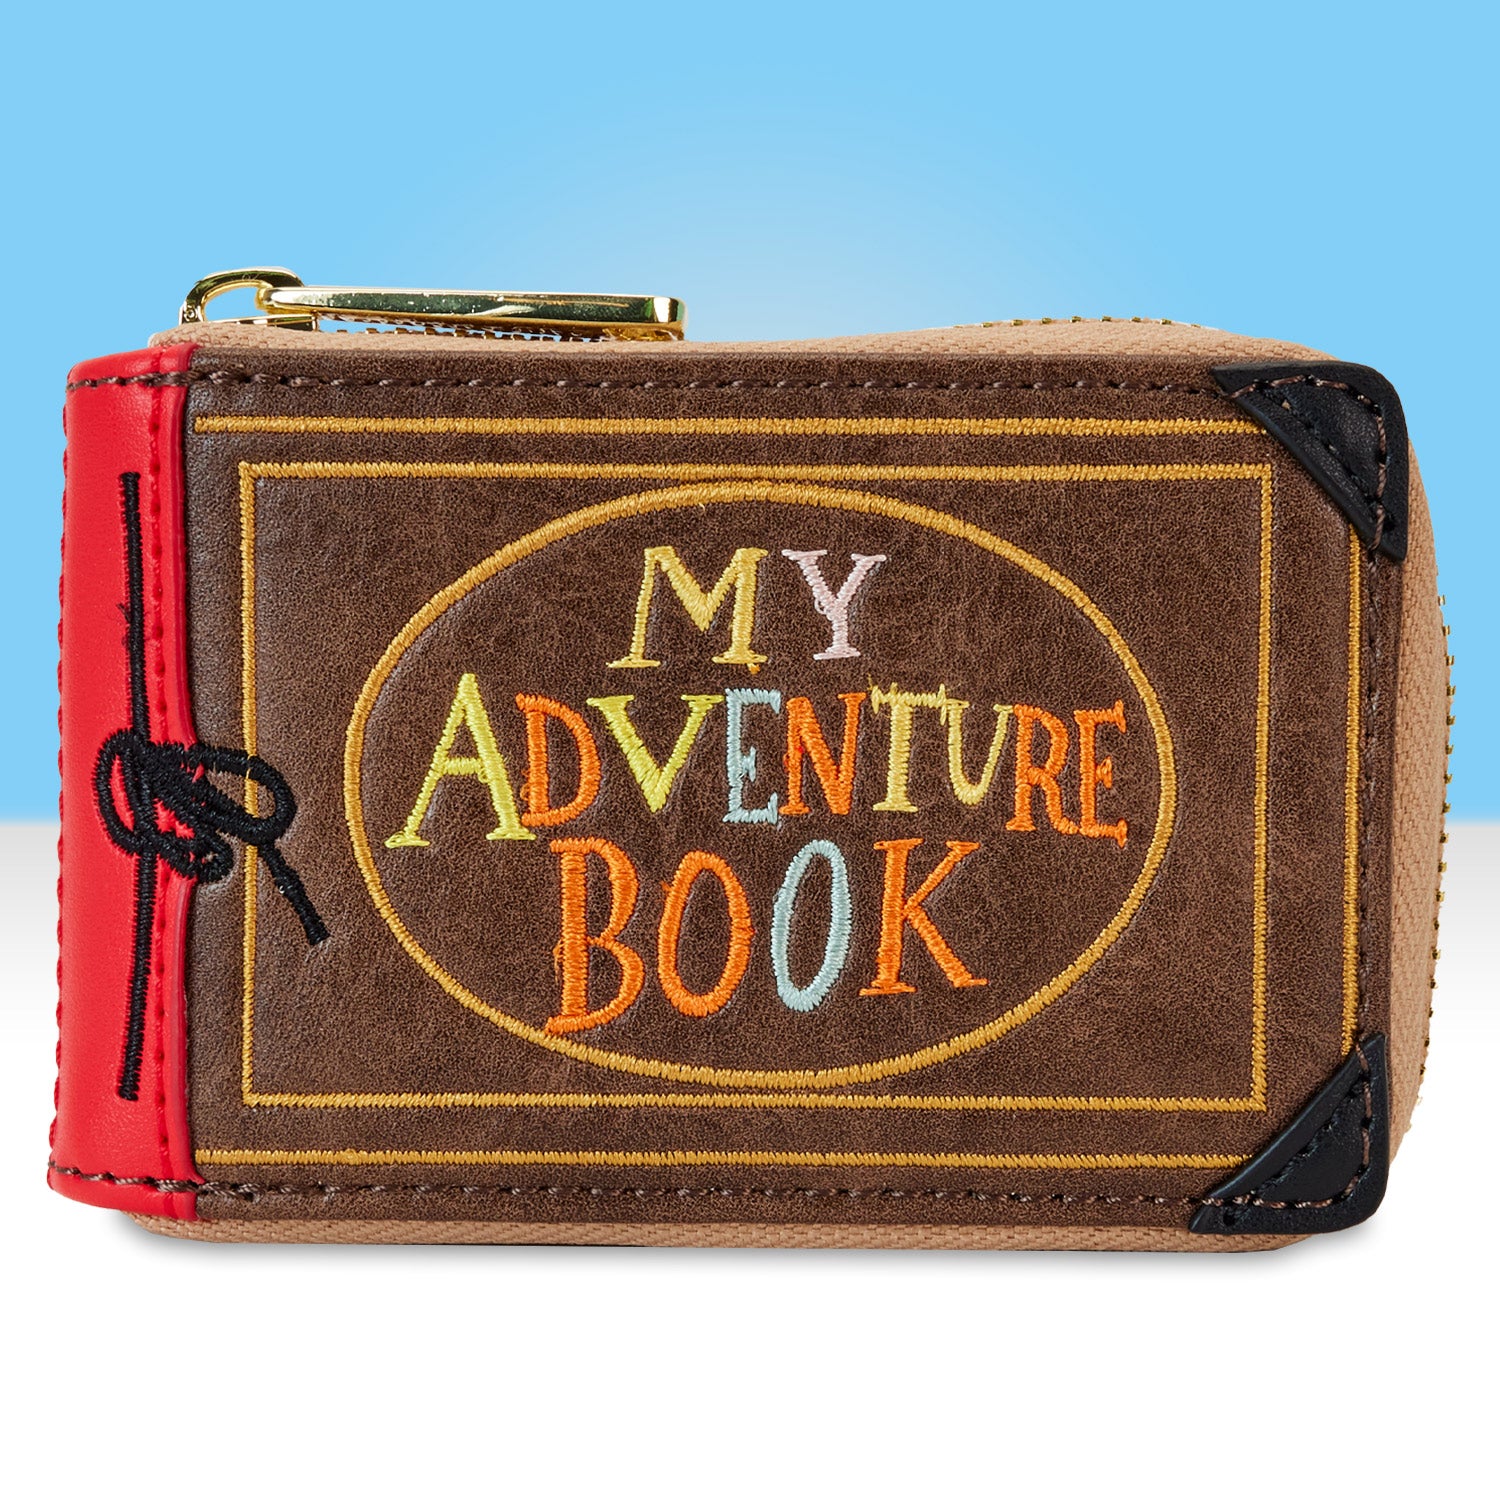 Loungefly x Disney Pixar Up 15th Anniversary Adventure Book Accordion Wallet